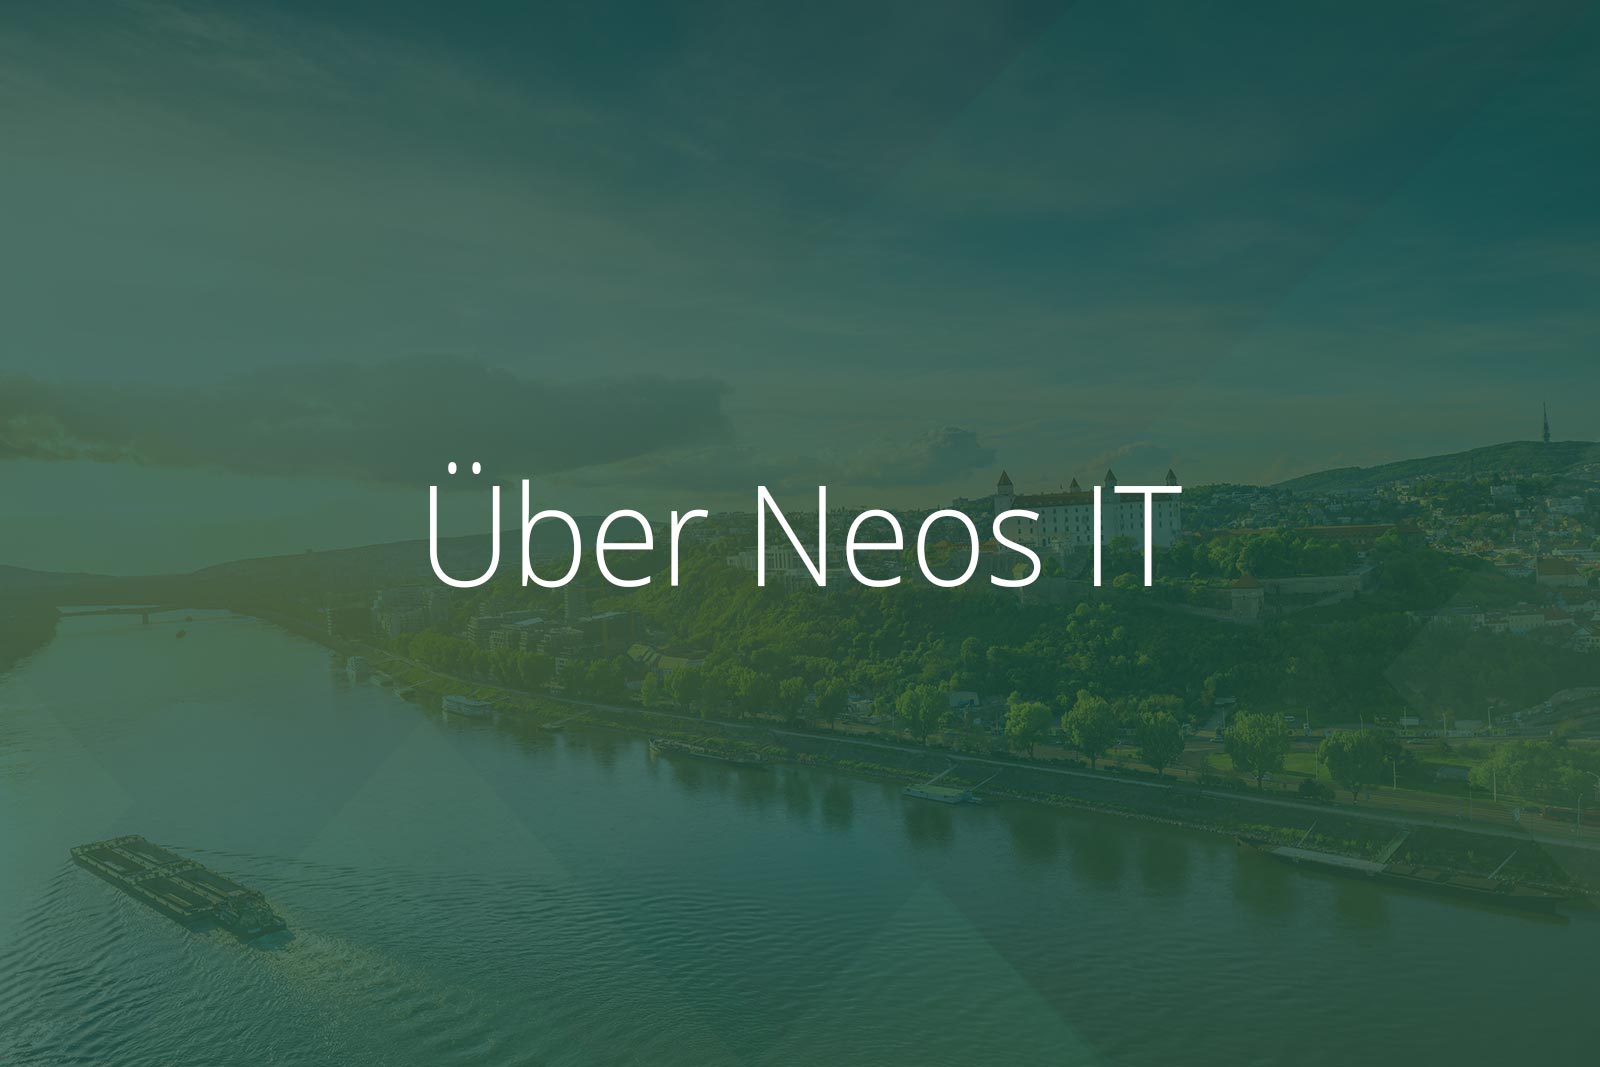 Über Neos IT Services, Abbildung Bratislava